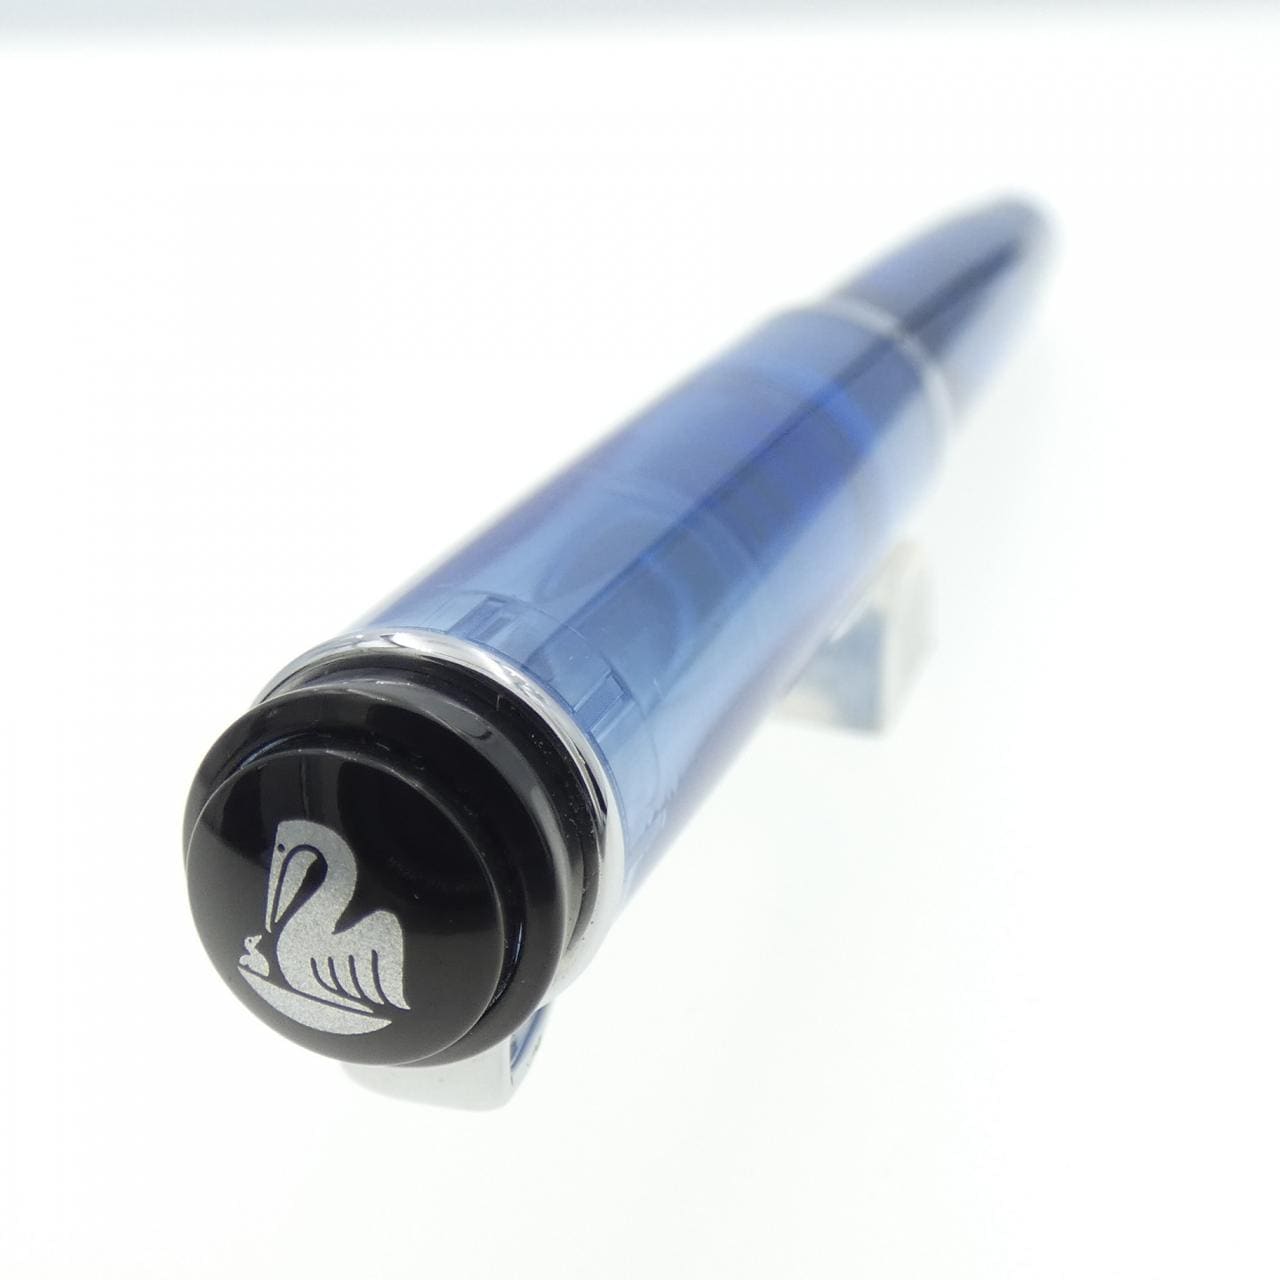 鹈鹕经典M205 demonstrator蓝色钢笔